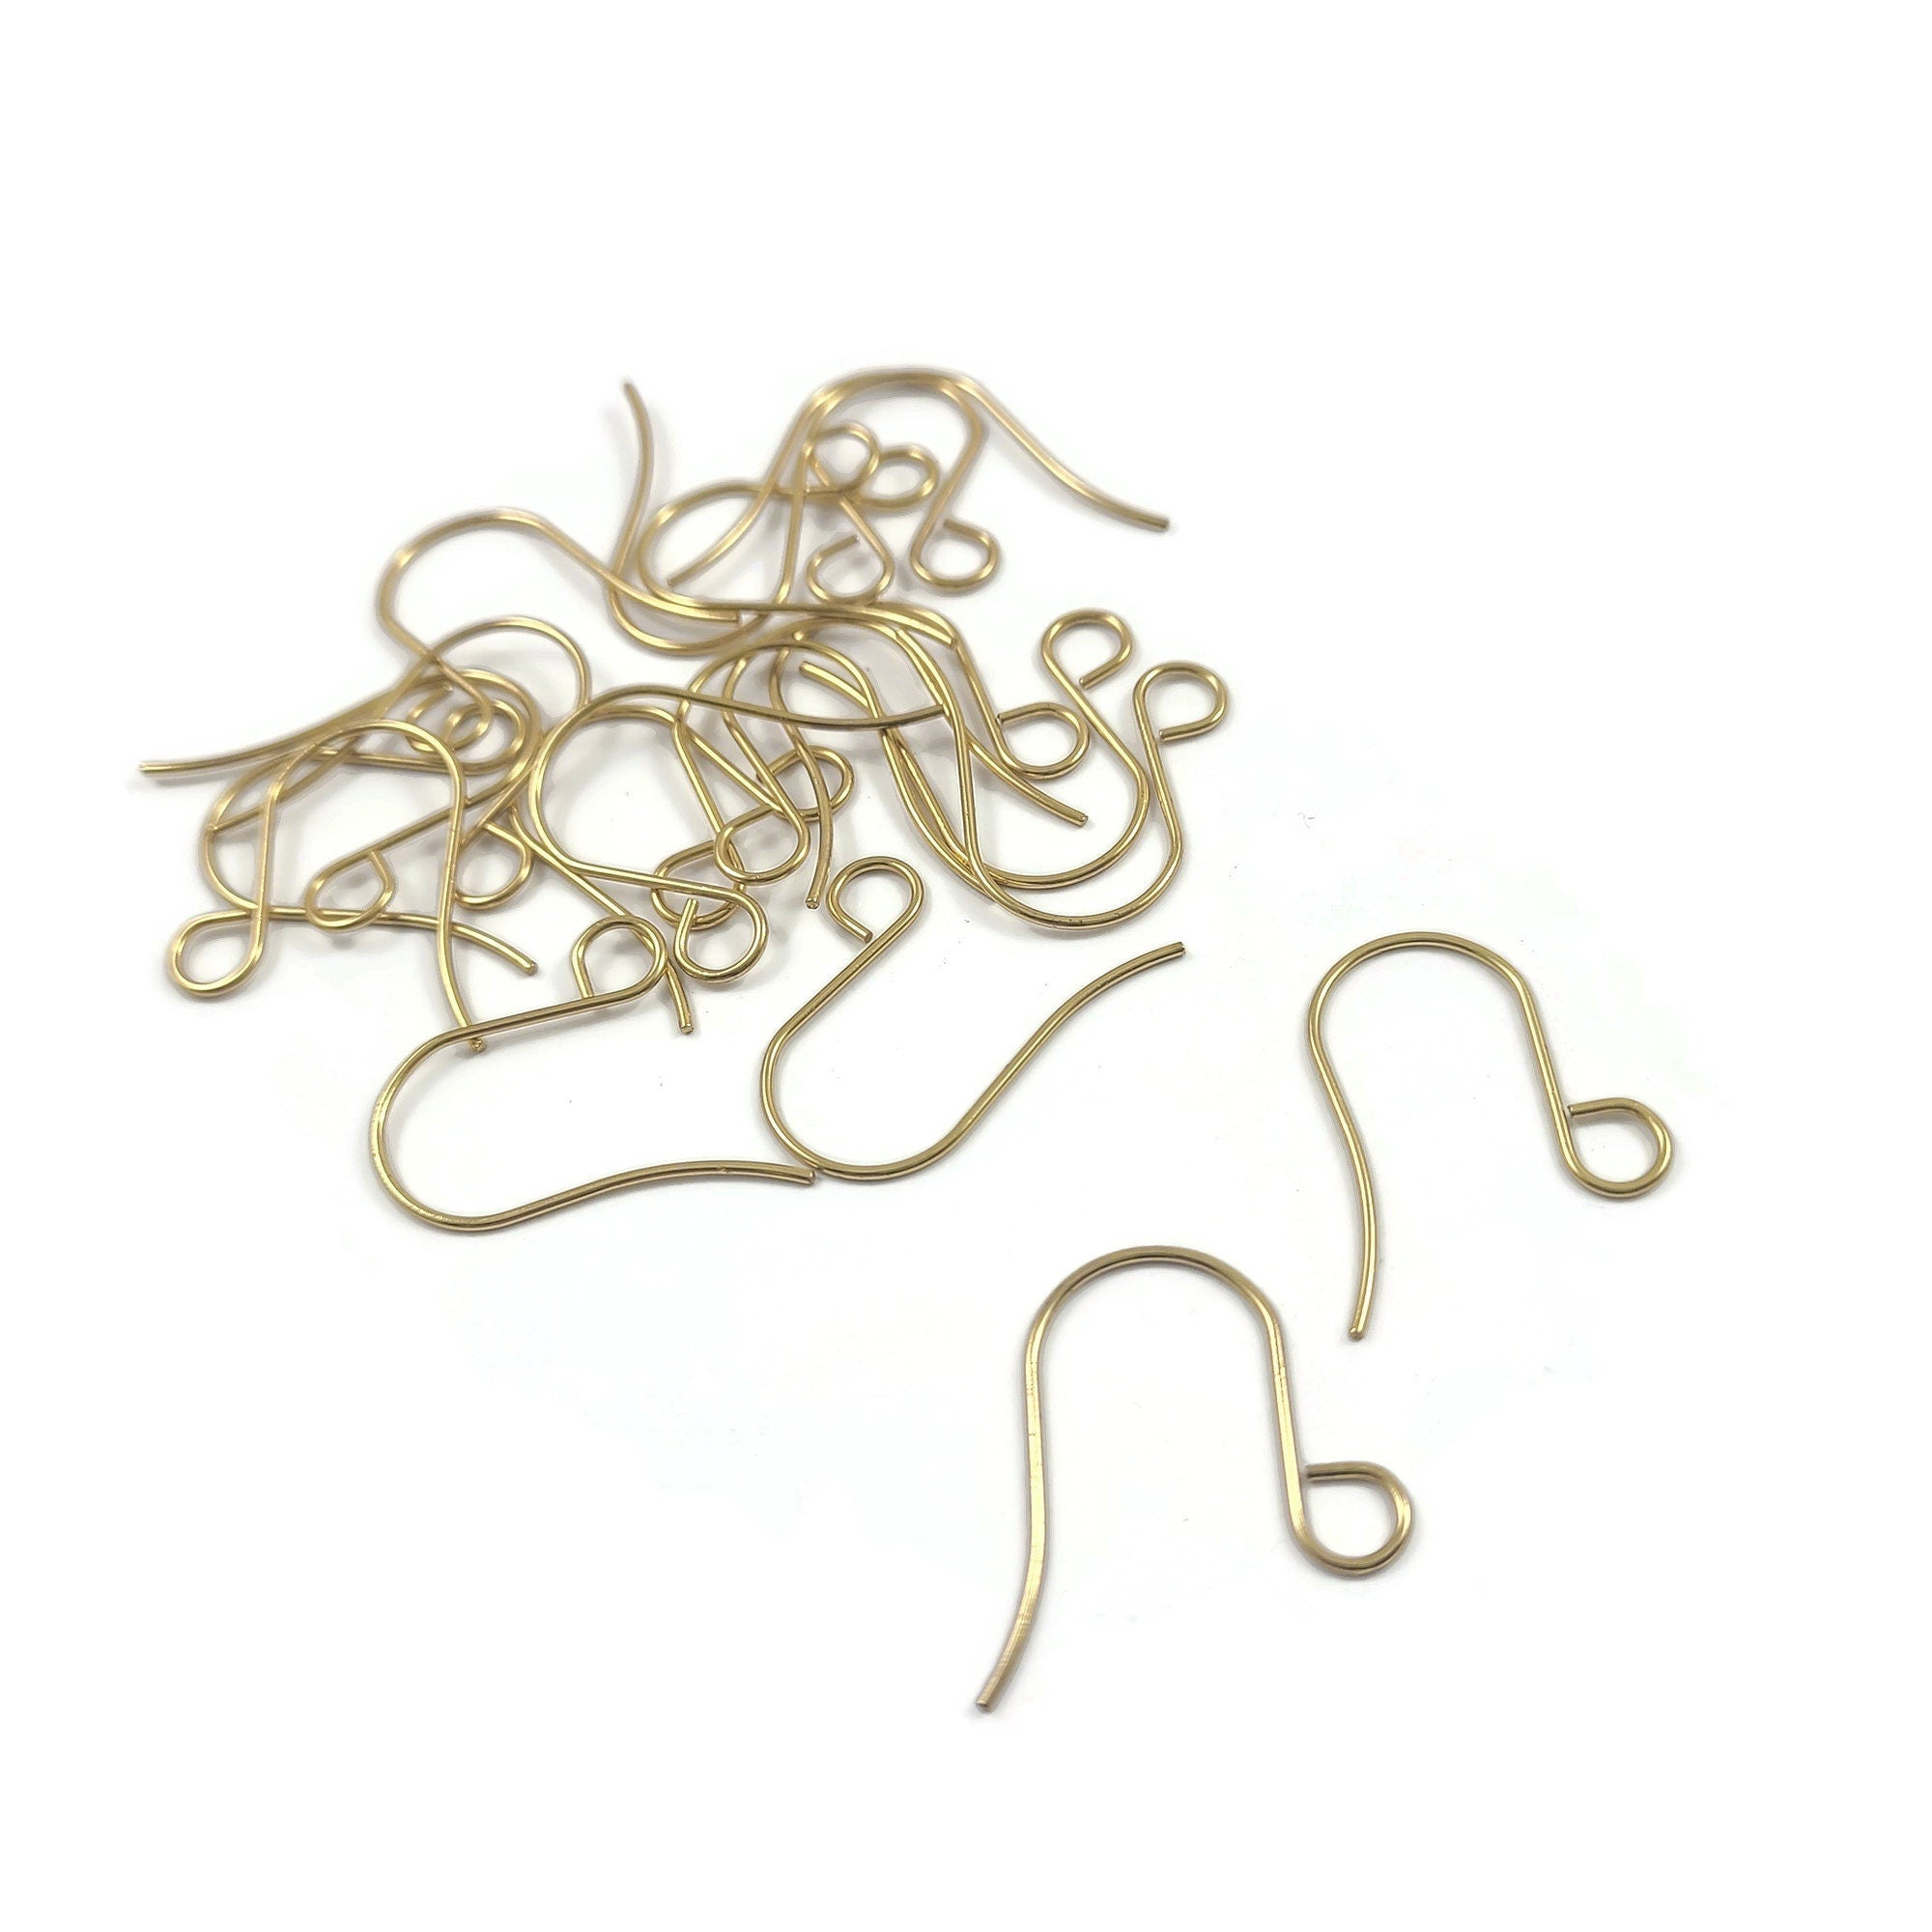 Big ear wire, 316 surgical steel hooks, Clay earring making findings